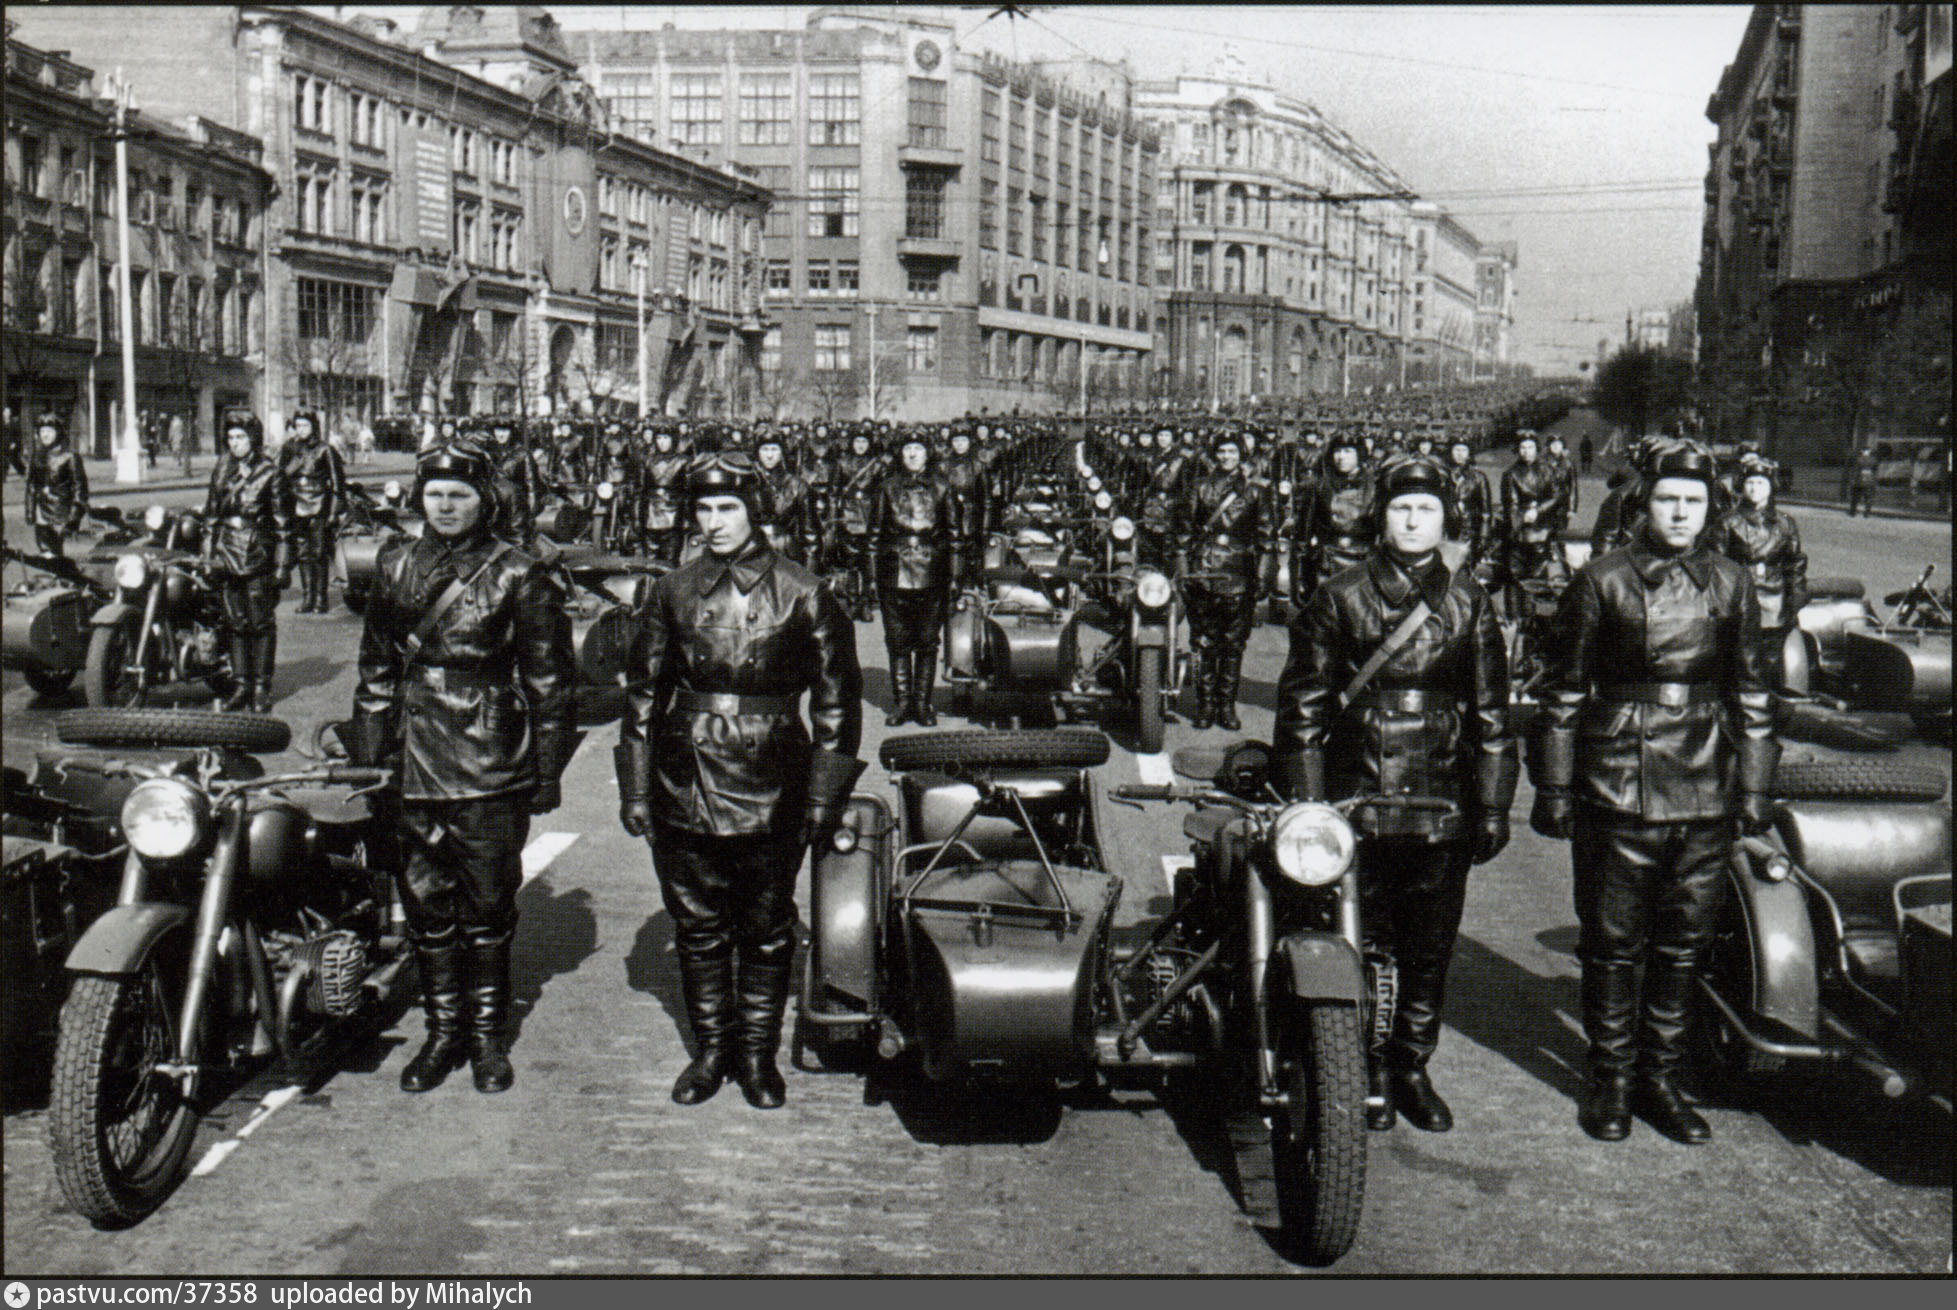 30 е июня. М72 мотоцикл 1941 1945. Парад во Львове 1939. Мотоциклисты РККА В 1941-1945. Военные мотоциклисты красной армии.